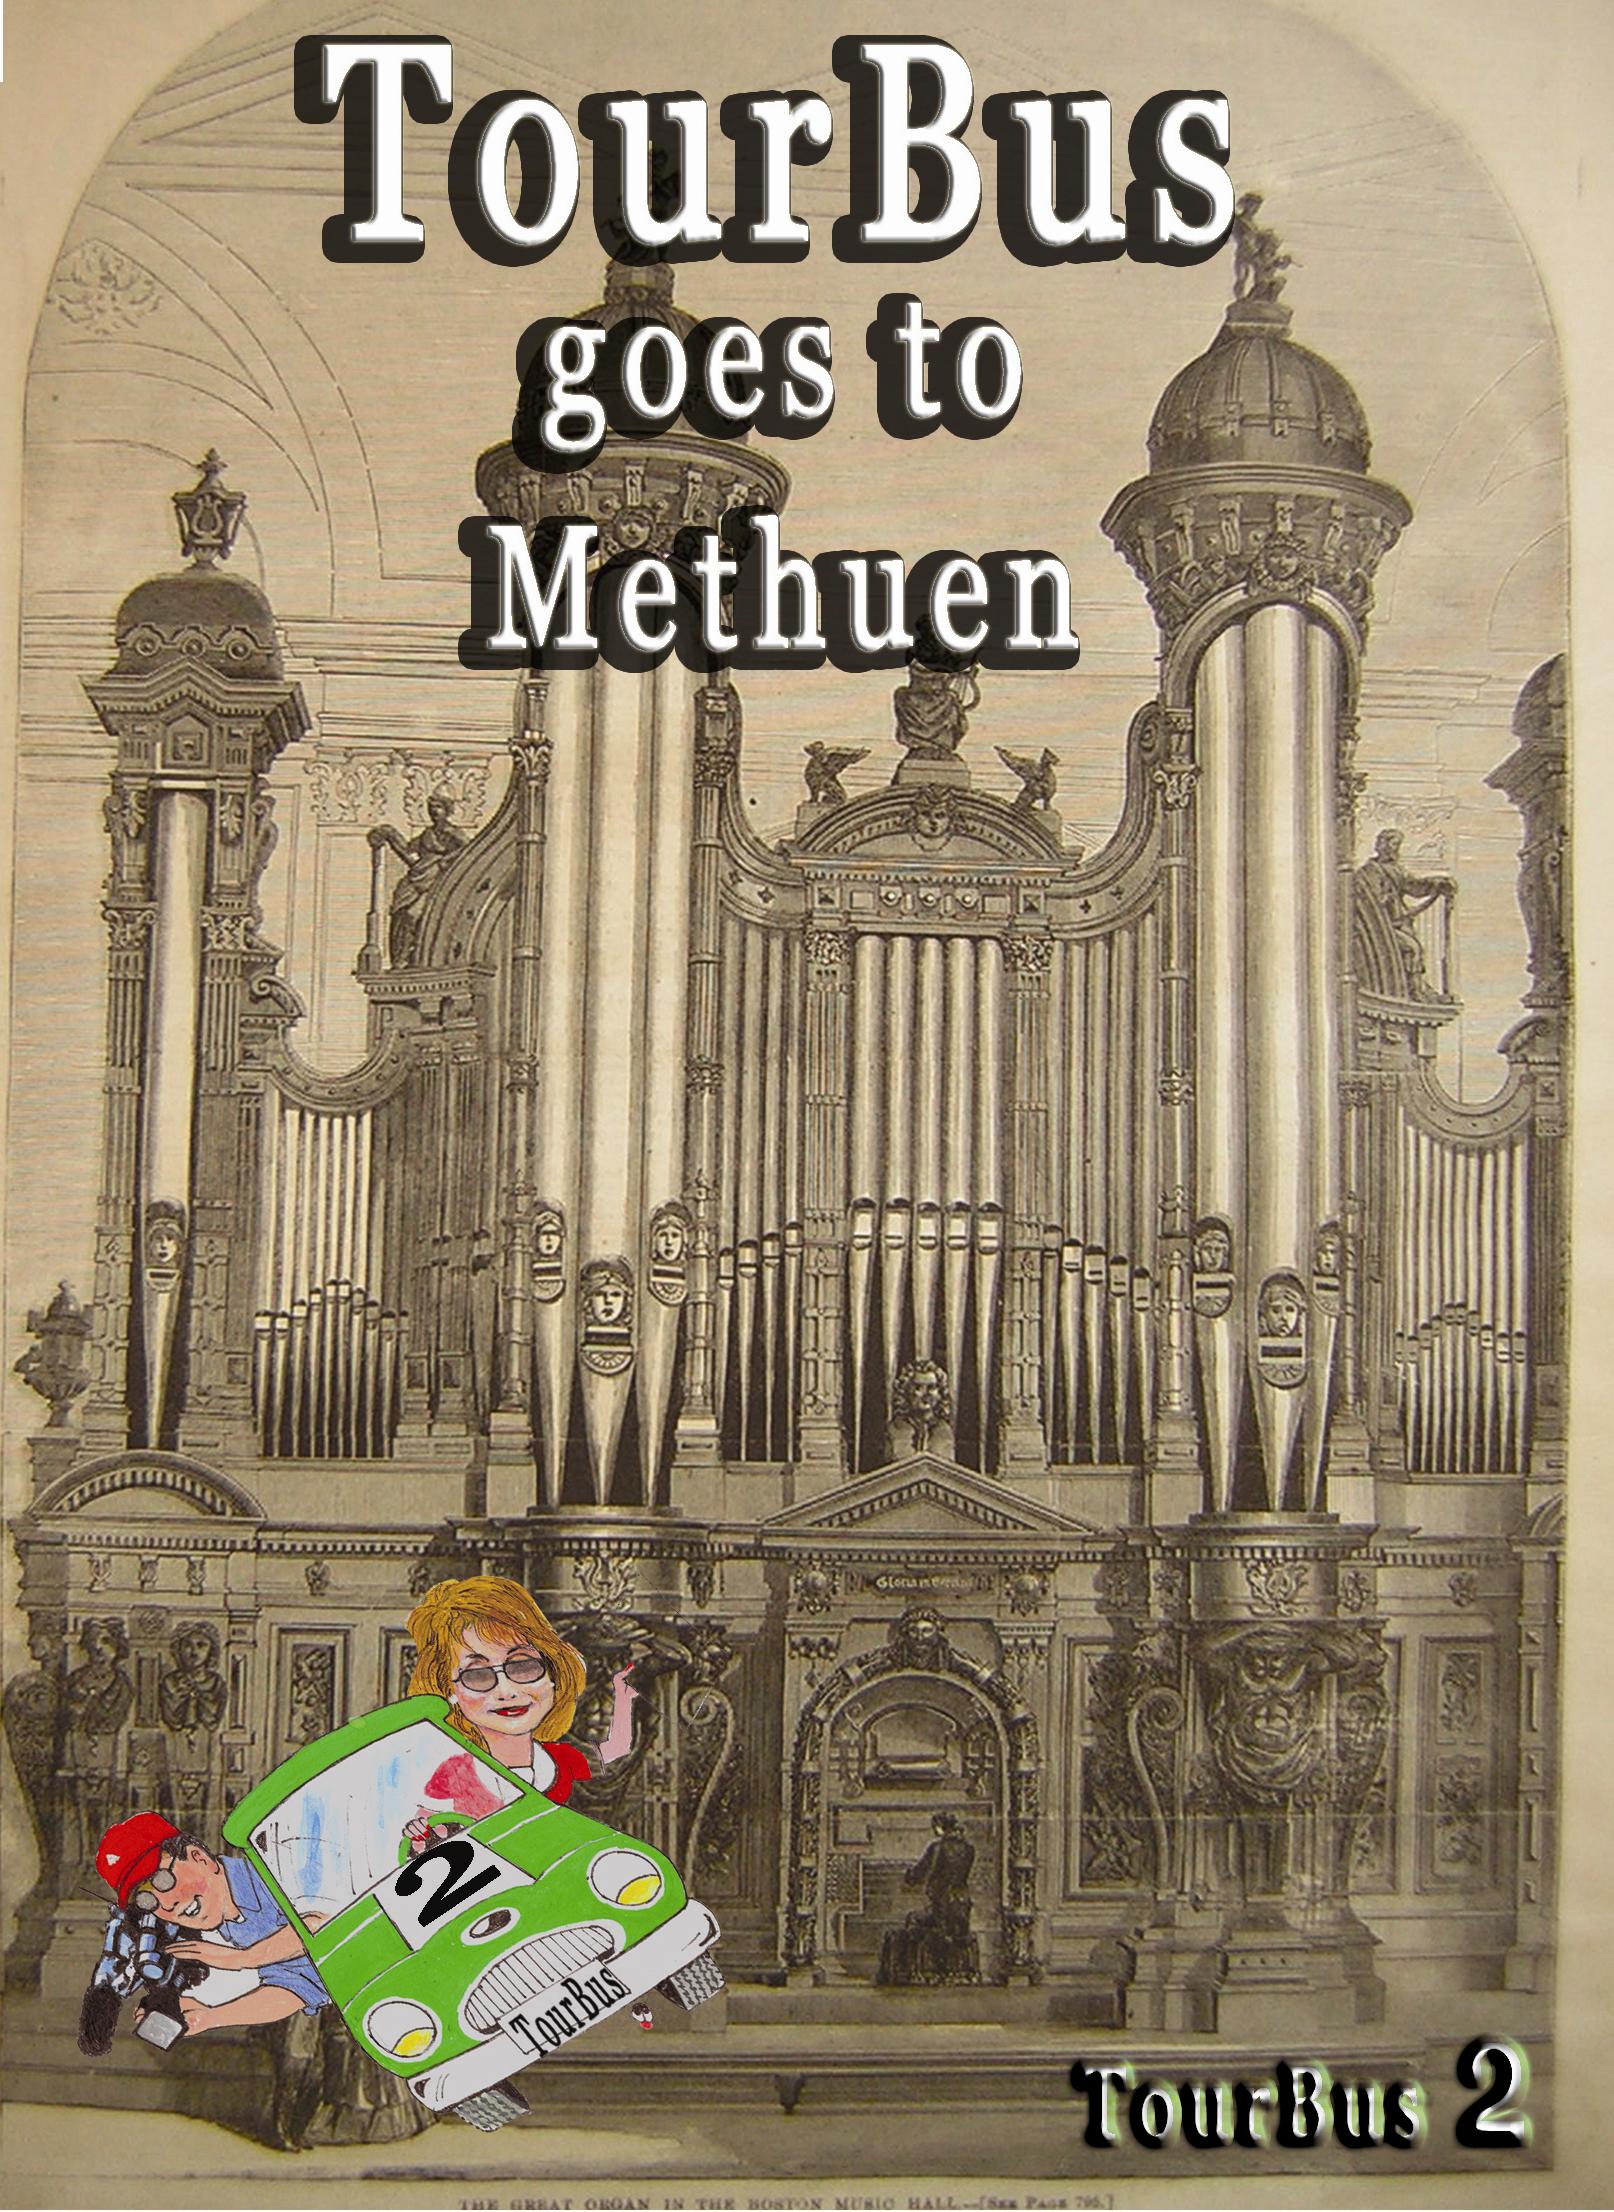 Methuen Music Hall Organ